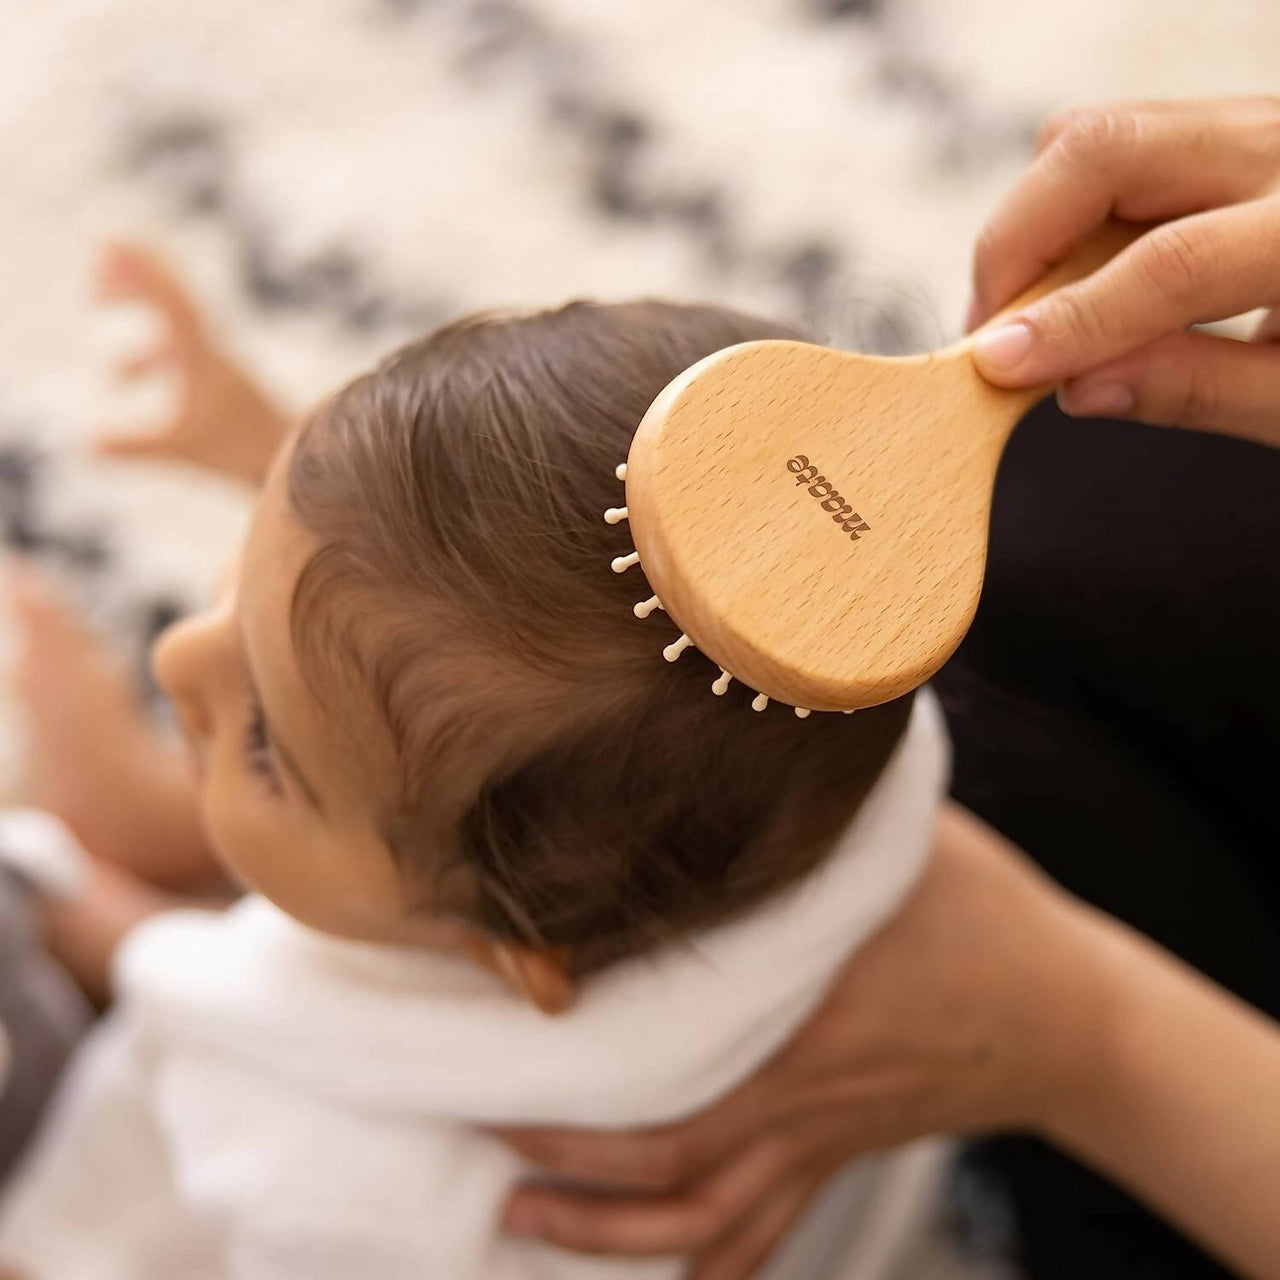 Maate Baby Wooden Comb Gift Box | Baby Wooden Hair Brush - Distacart